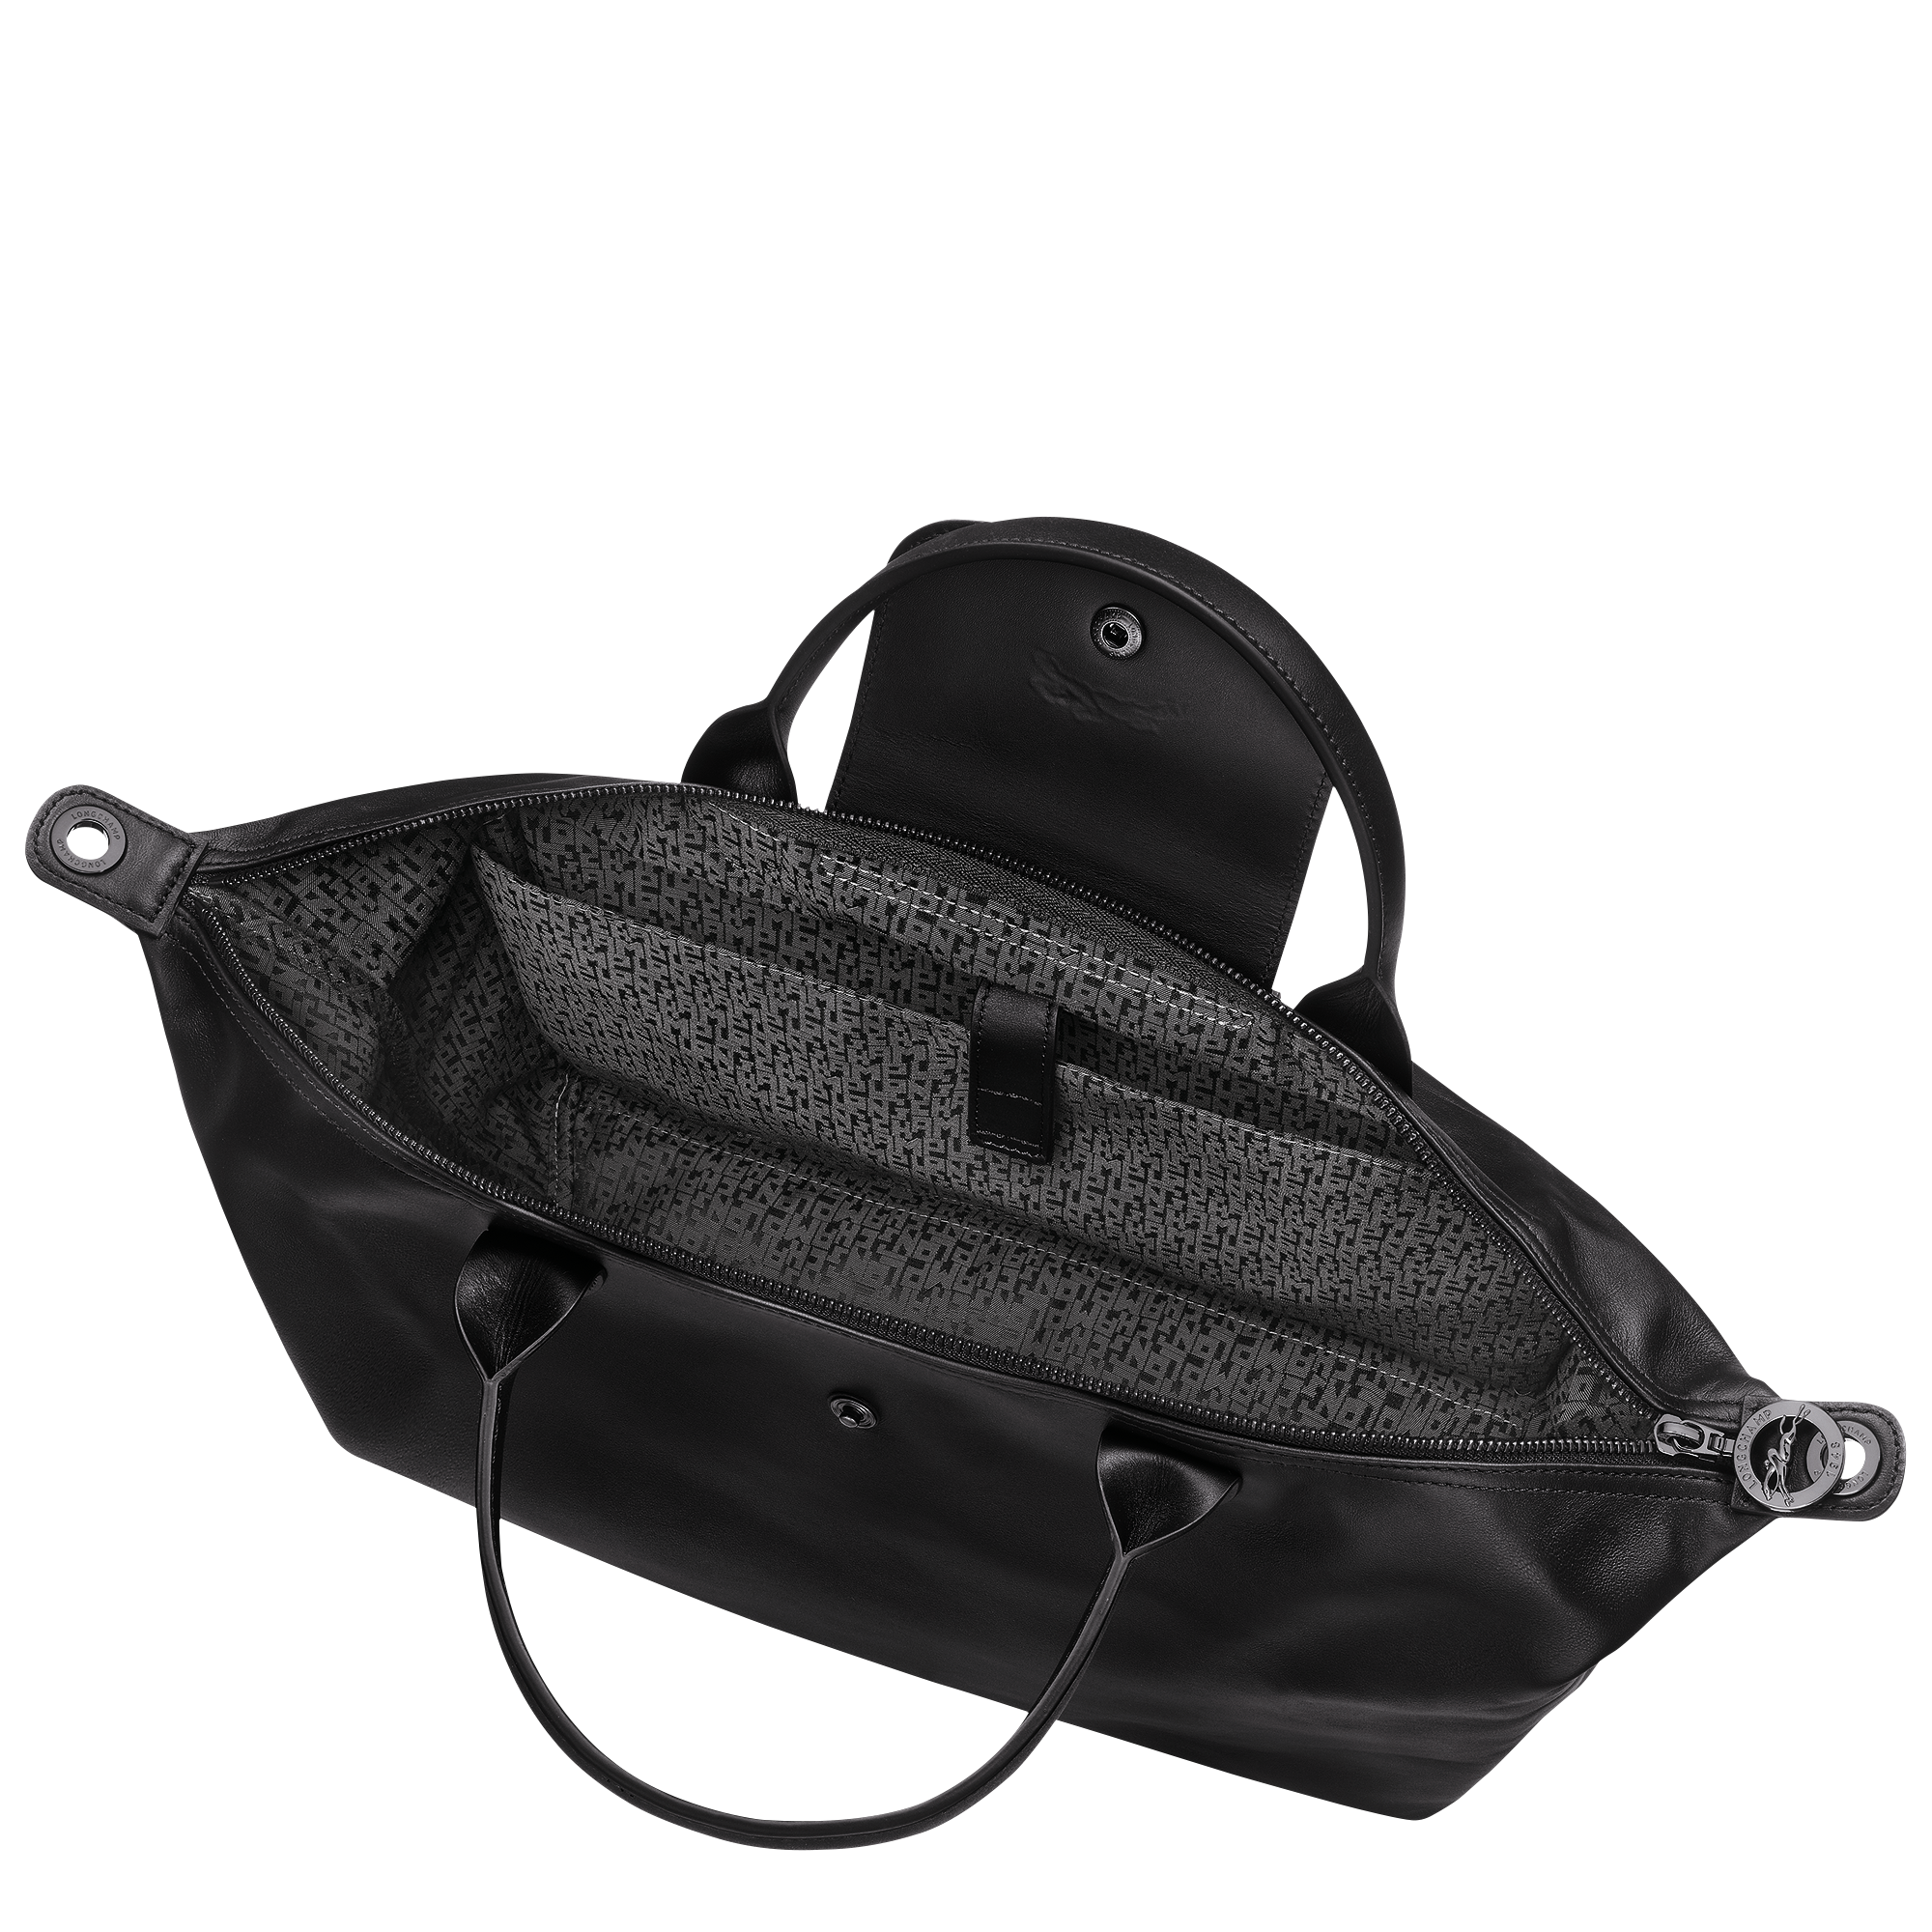 Handbag Longchamp Black in Polyester - 31899852